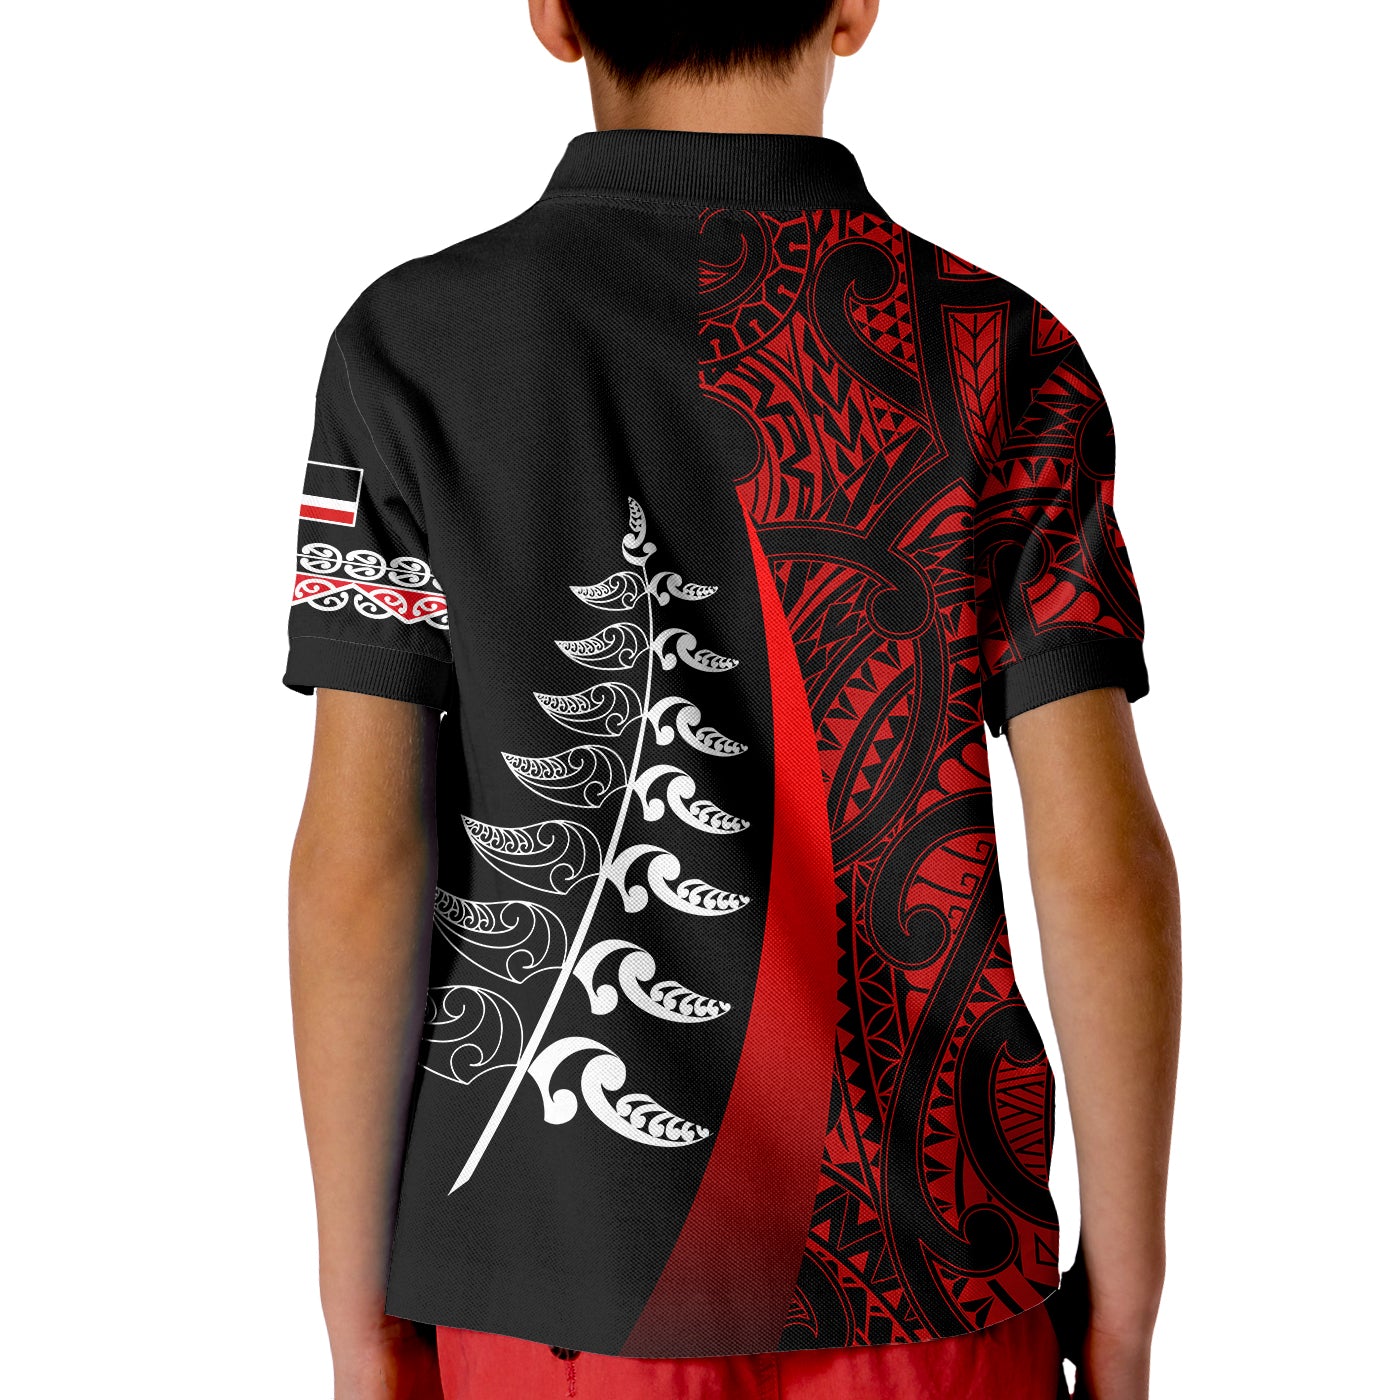 waitangi-day-polo-shirt-maori-mix-fern-style-red